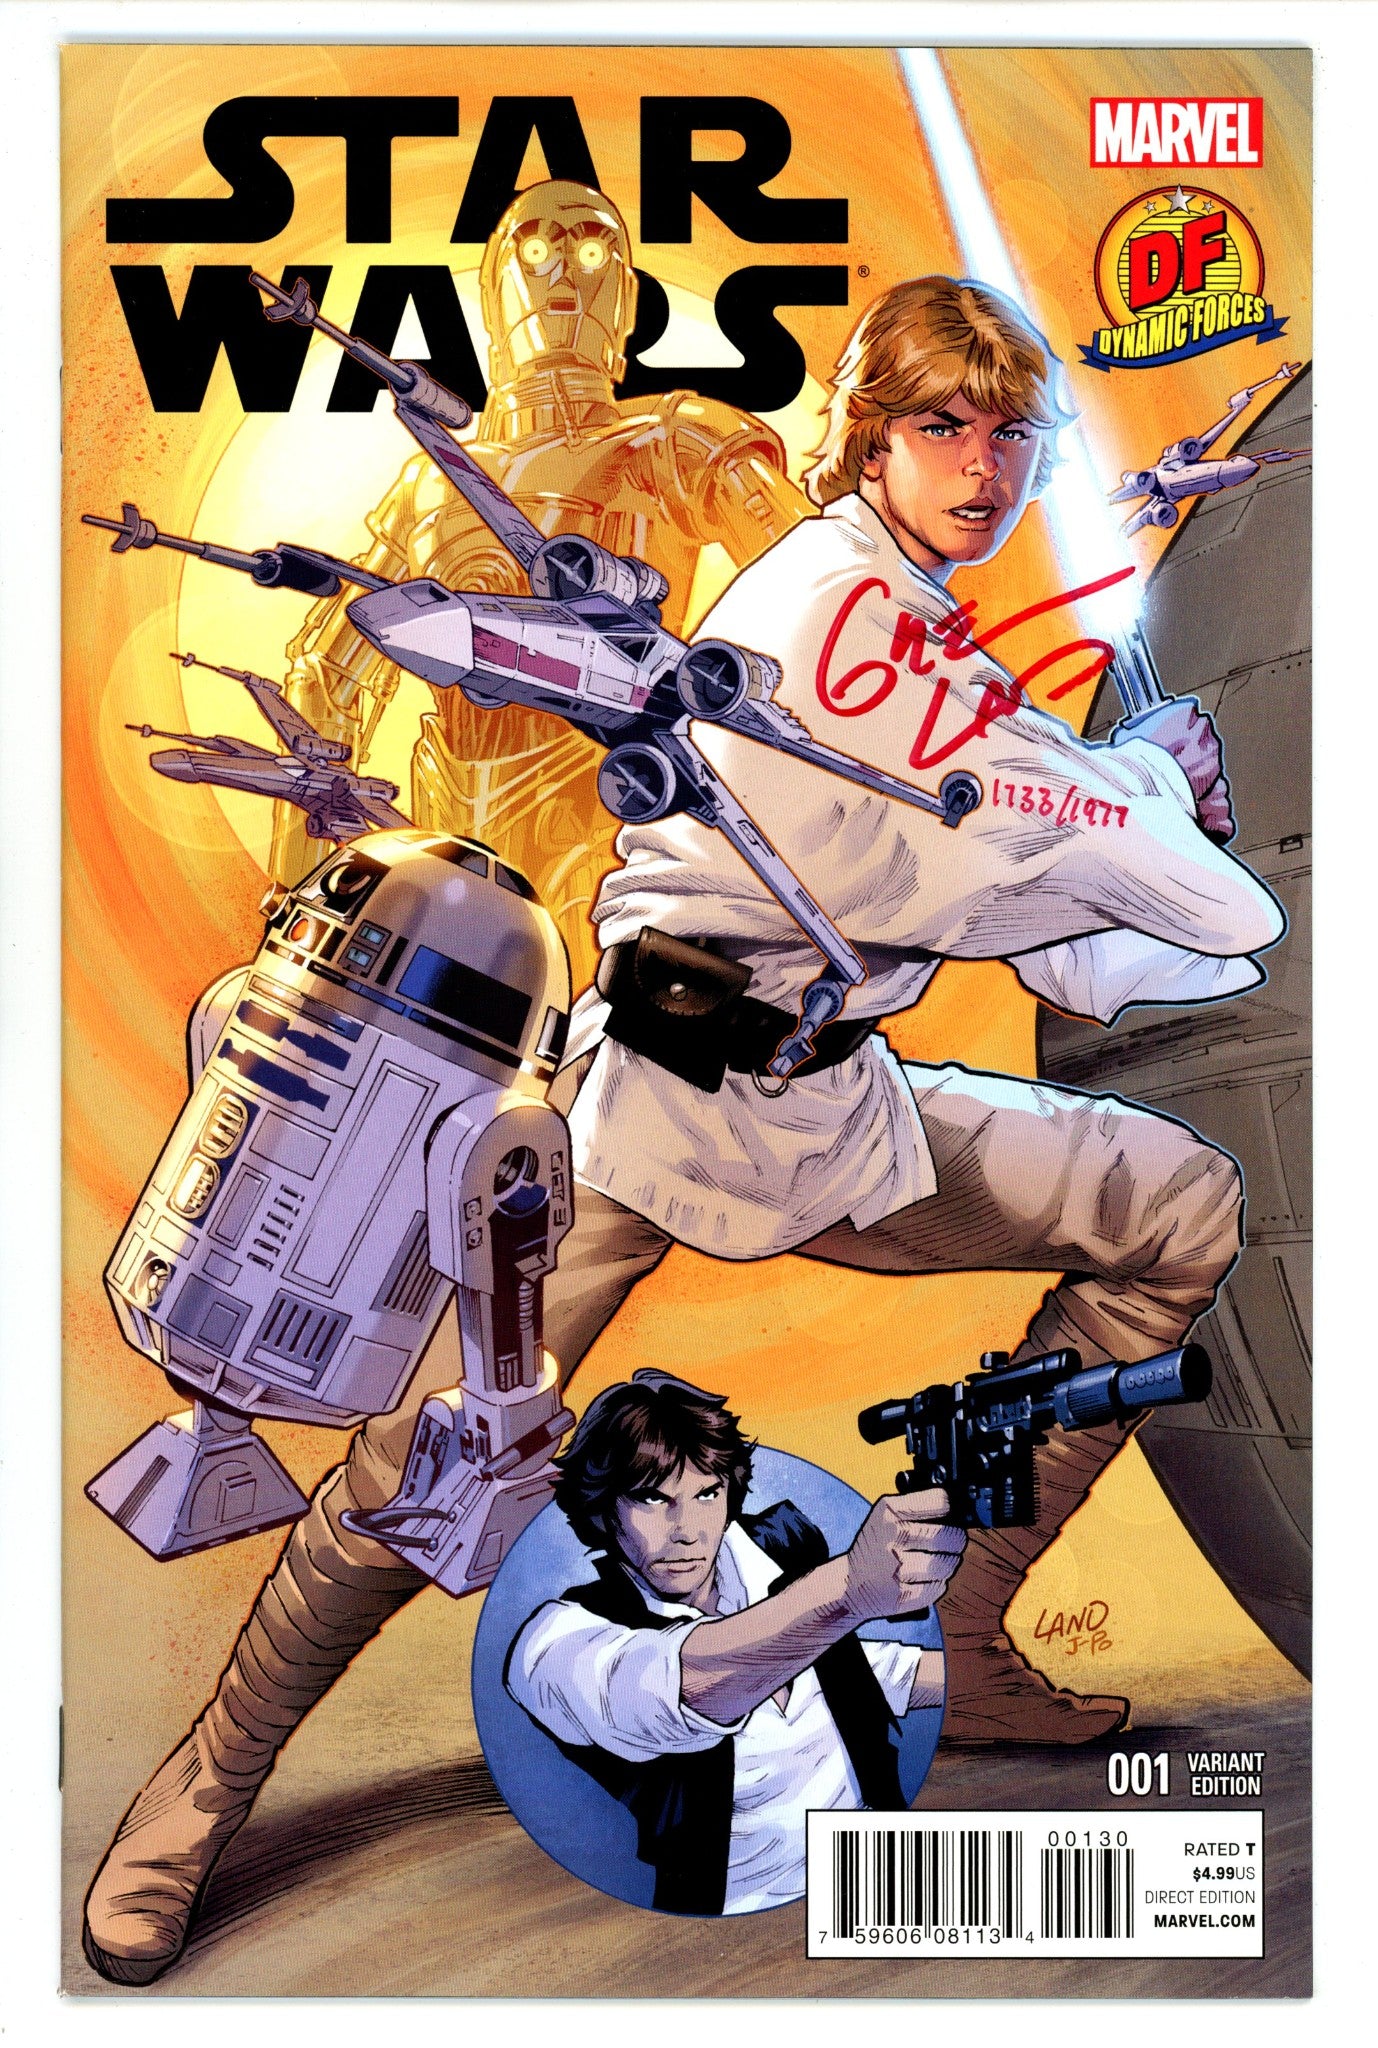 Star Wars Vol 2 1 NM- (9.2) (2015) Land Dynamic Forces Variant Signed x1 Cover Greg Land 